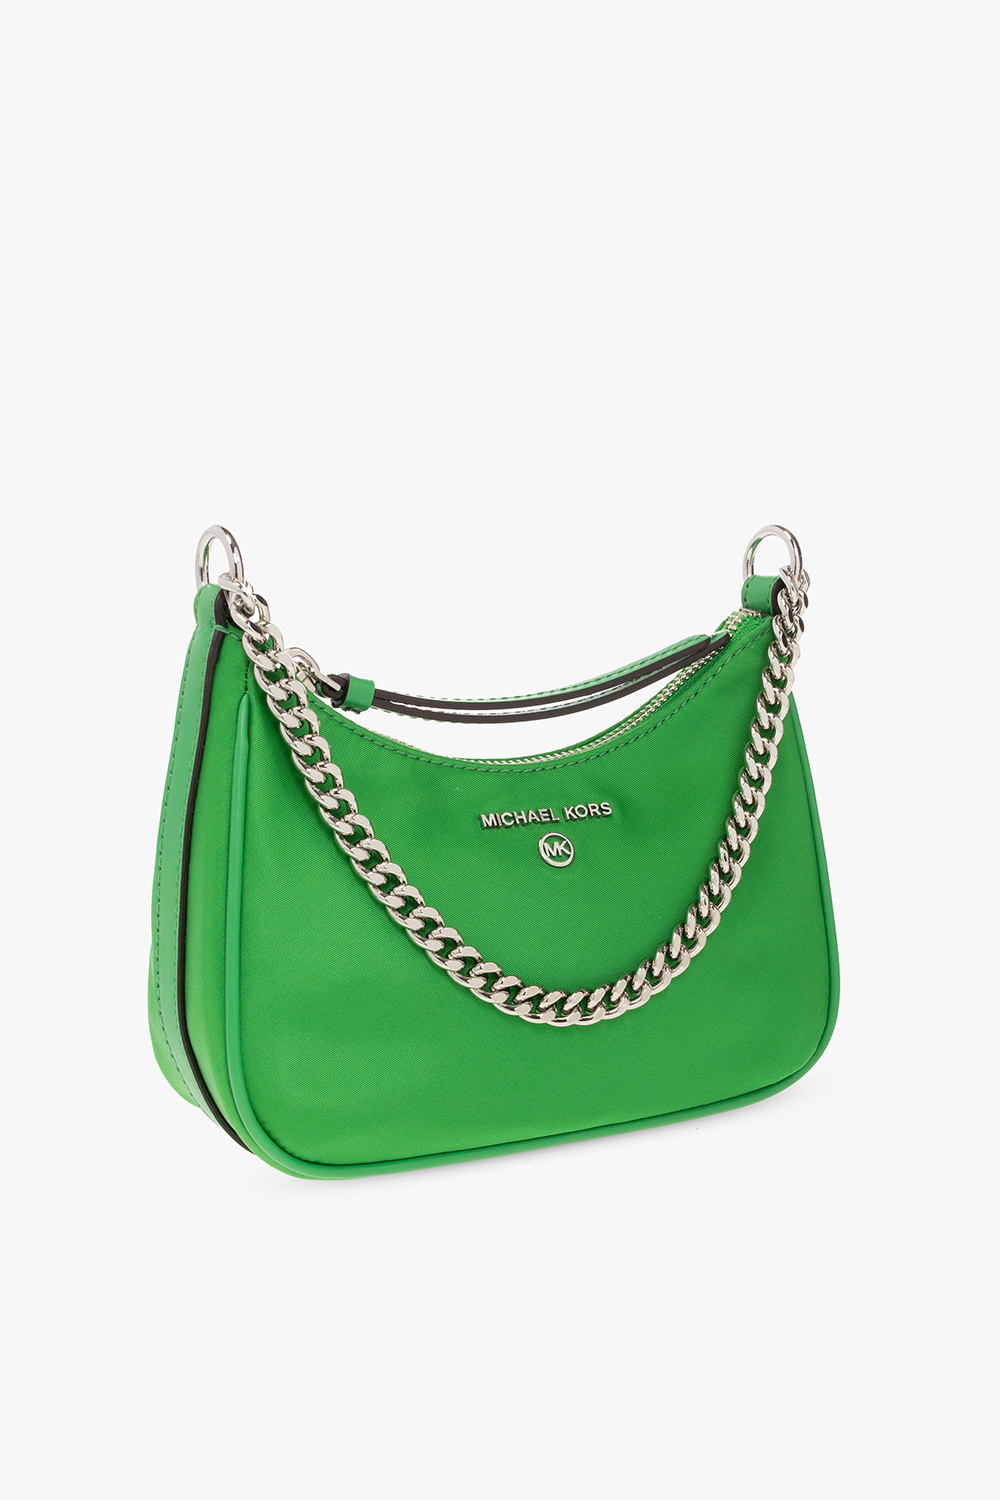 Women's Violett Bags, Michael Michael Kors 'Jet Set Charm Small' handbag, StclaircomoShops